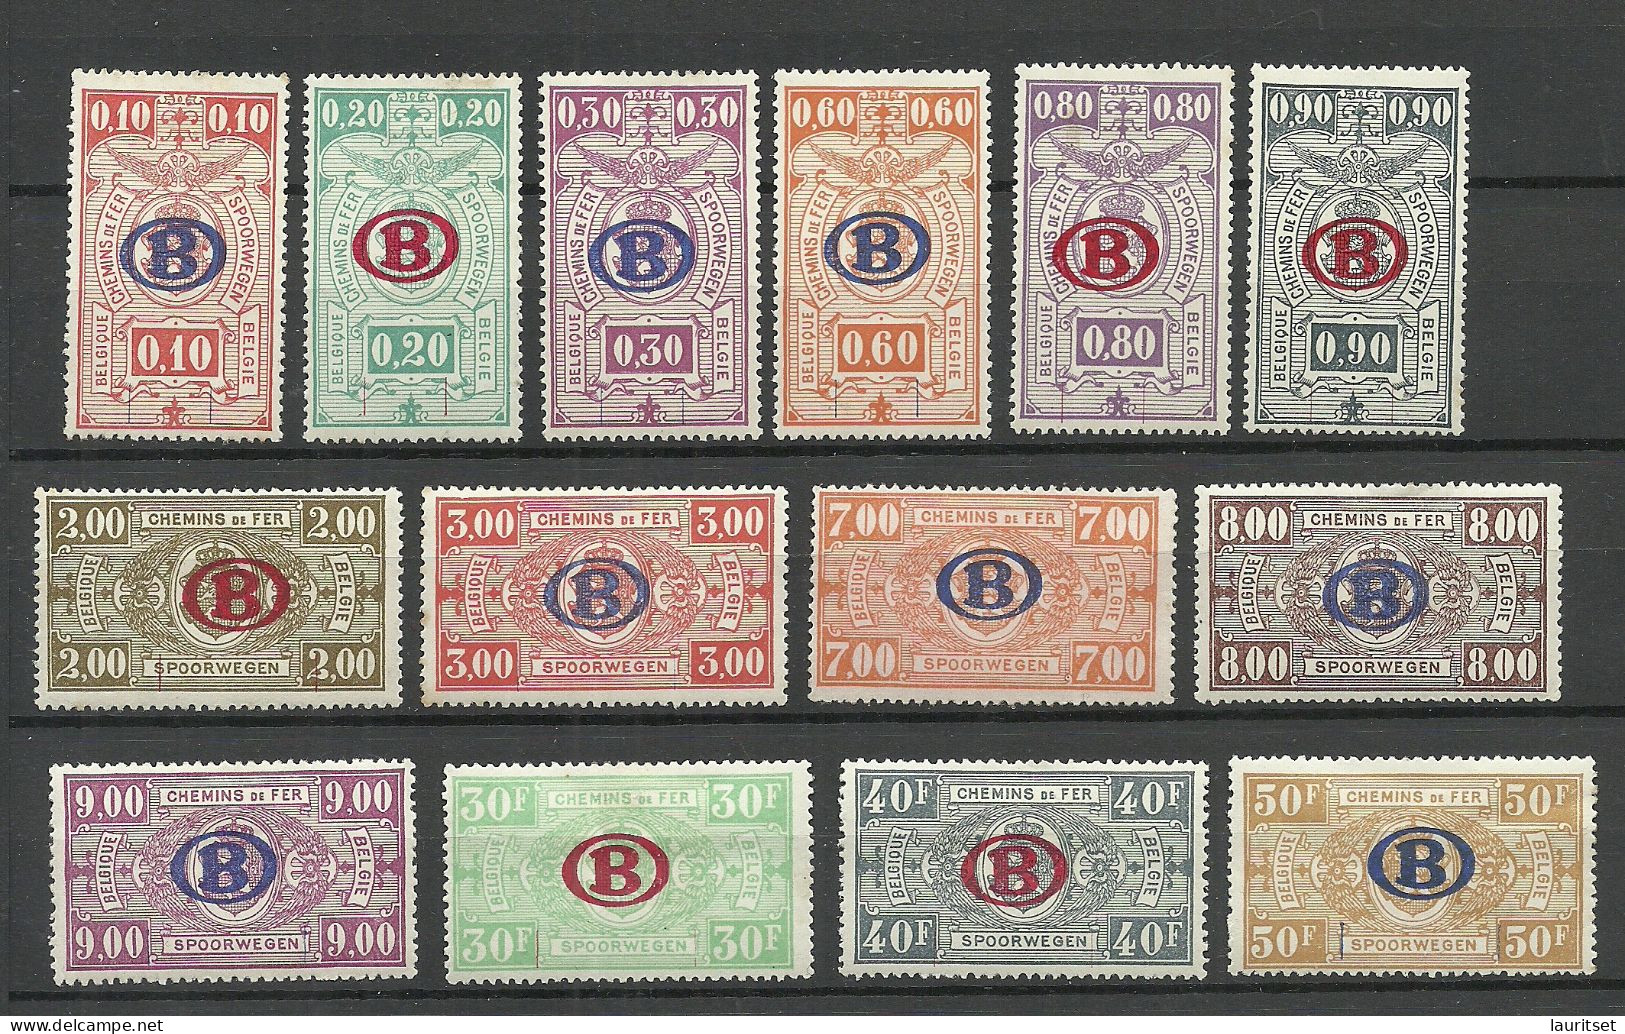 BELGIEN Belgium Belgique 1940 = 14 Values From Set Michel 202 - 224 Eisenbahnpaketmarken Railway Packet Stamps * - Neufs